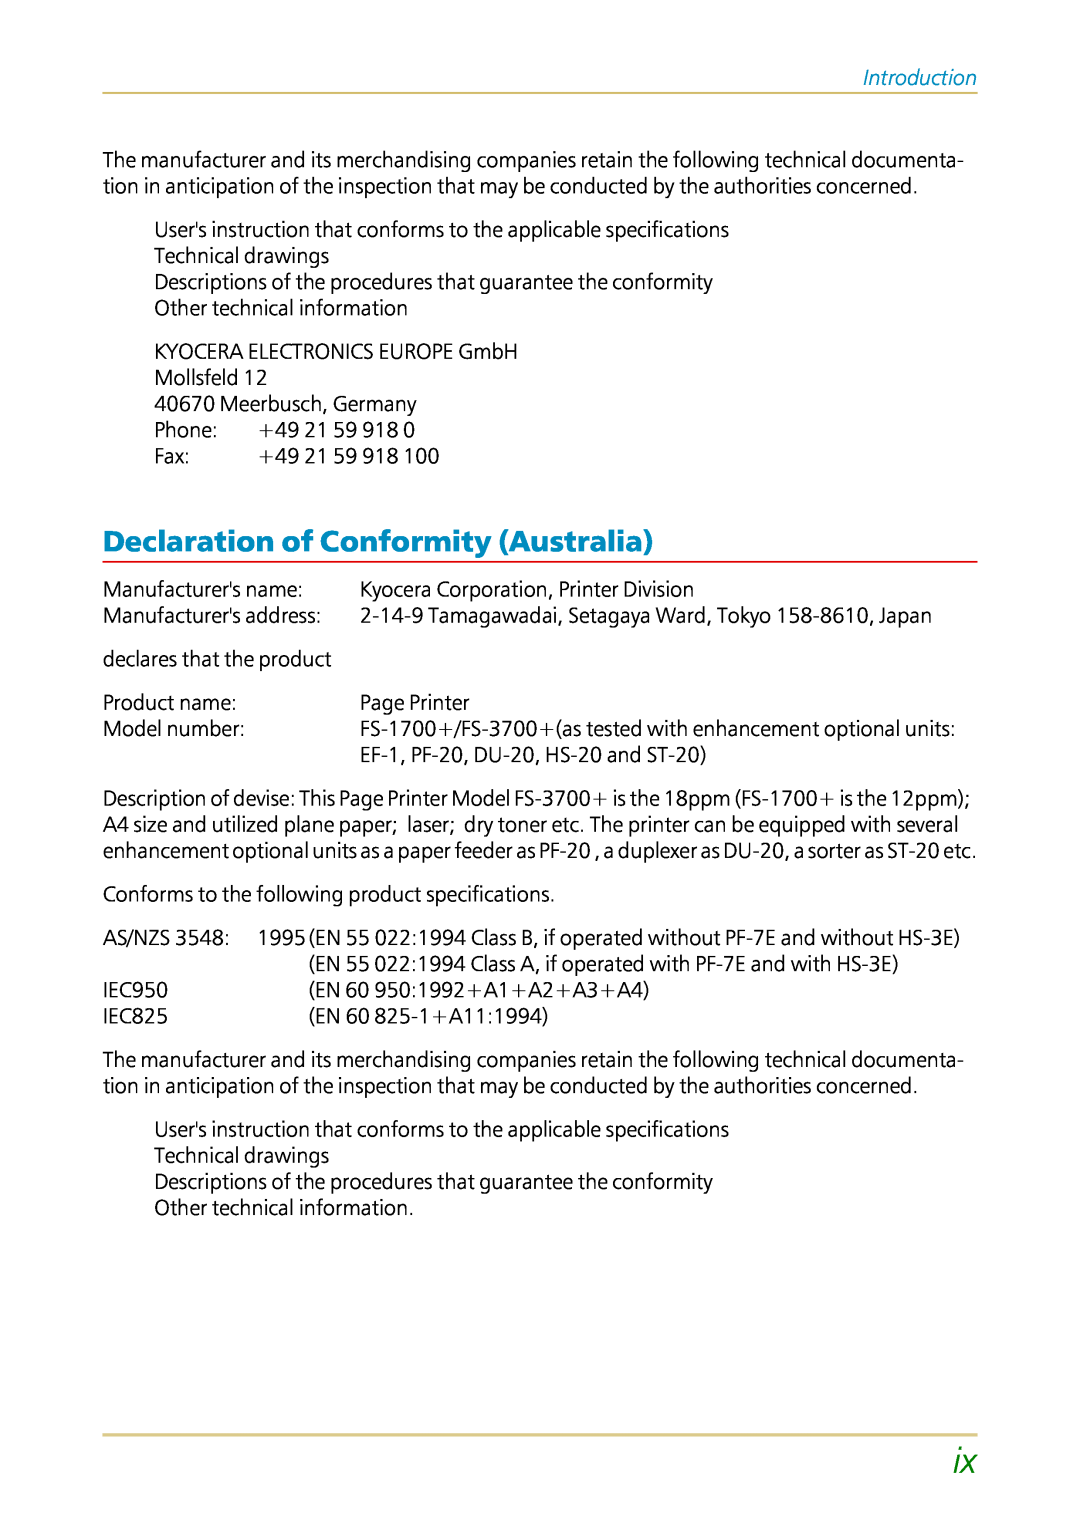 Kyocera FS-1700 user manual Declaration of Conformity Australia, Introduction 